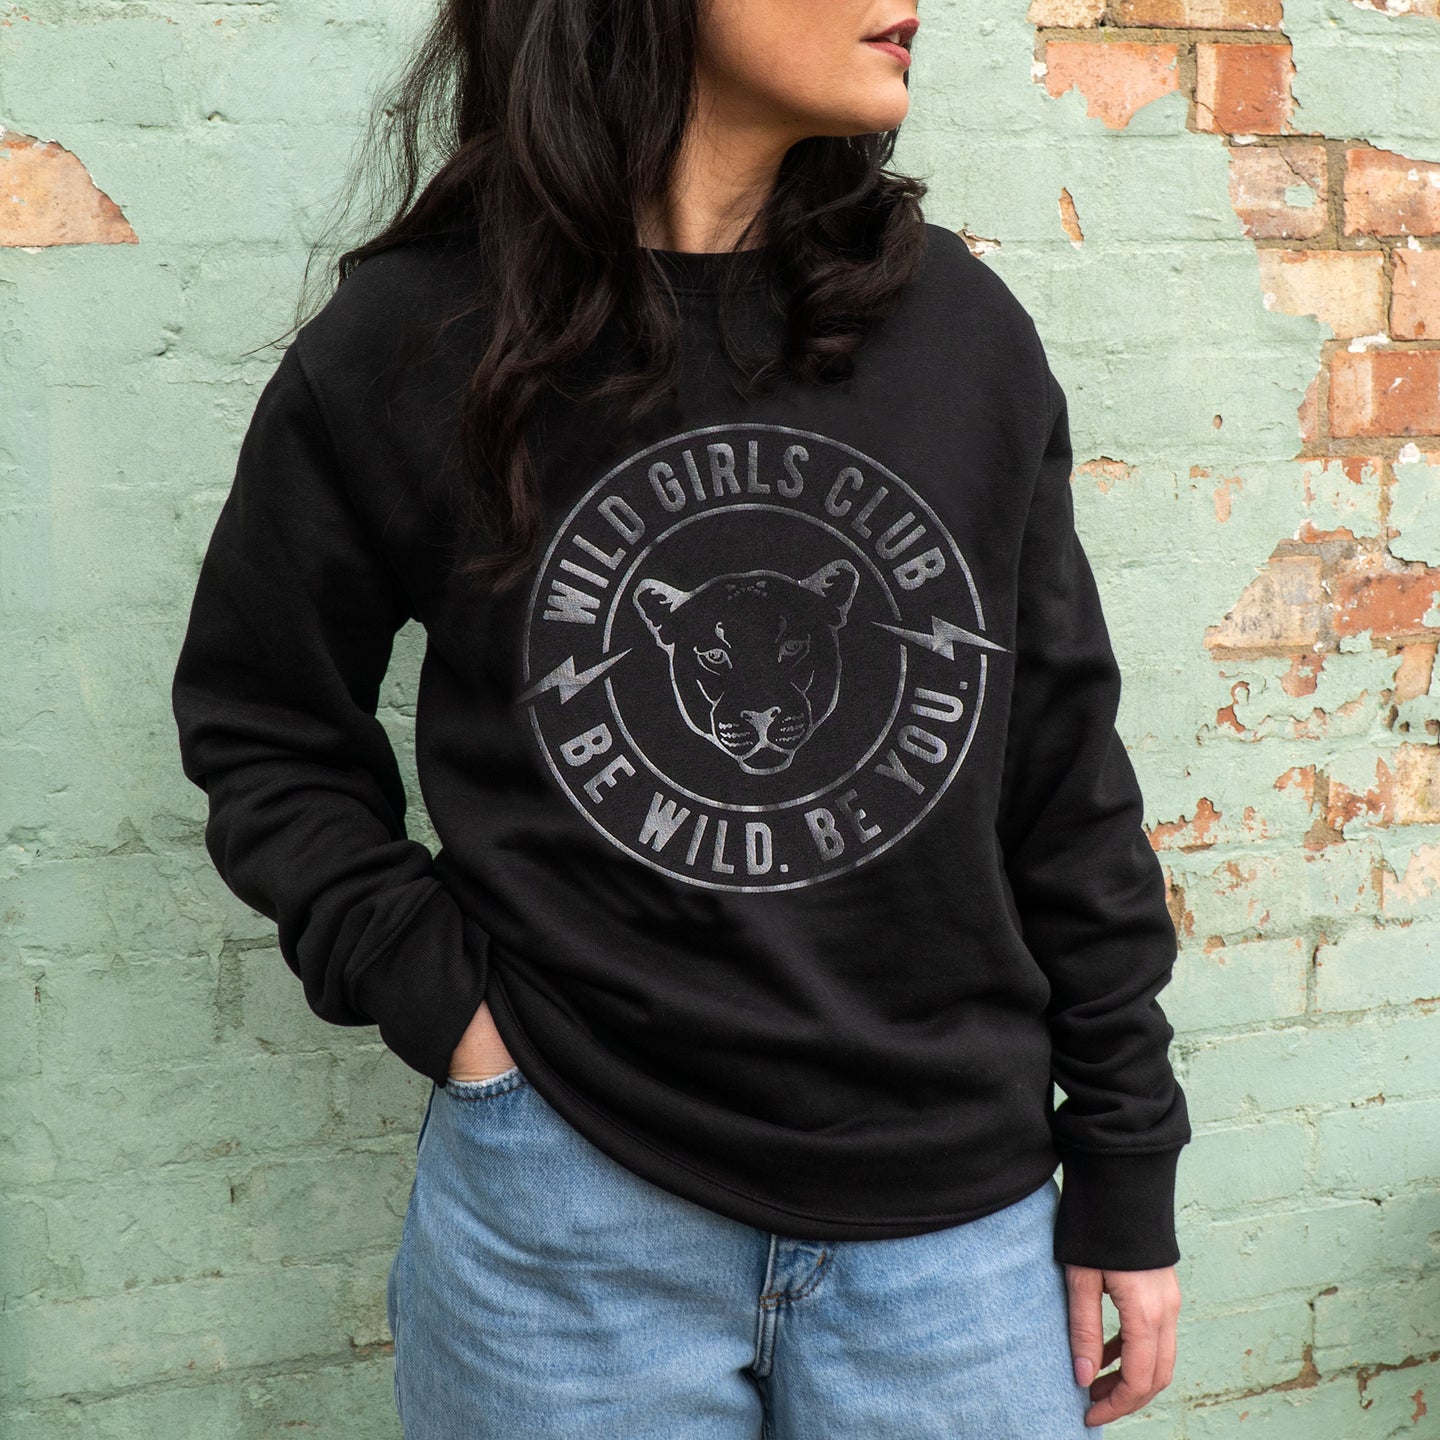 Wild Girls Club Sweatshirt – Black & Black